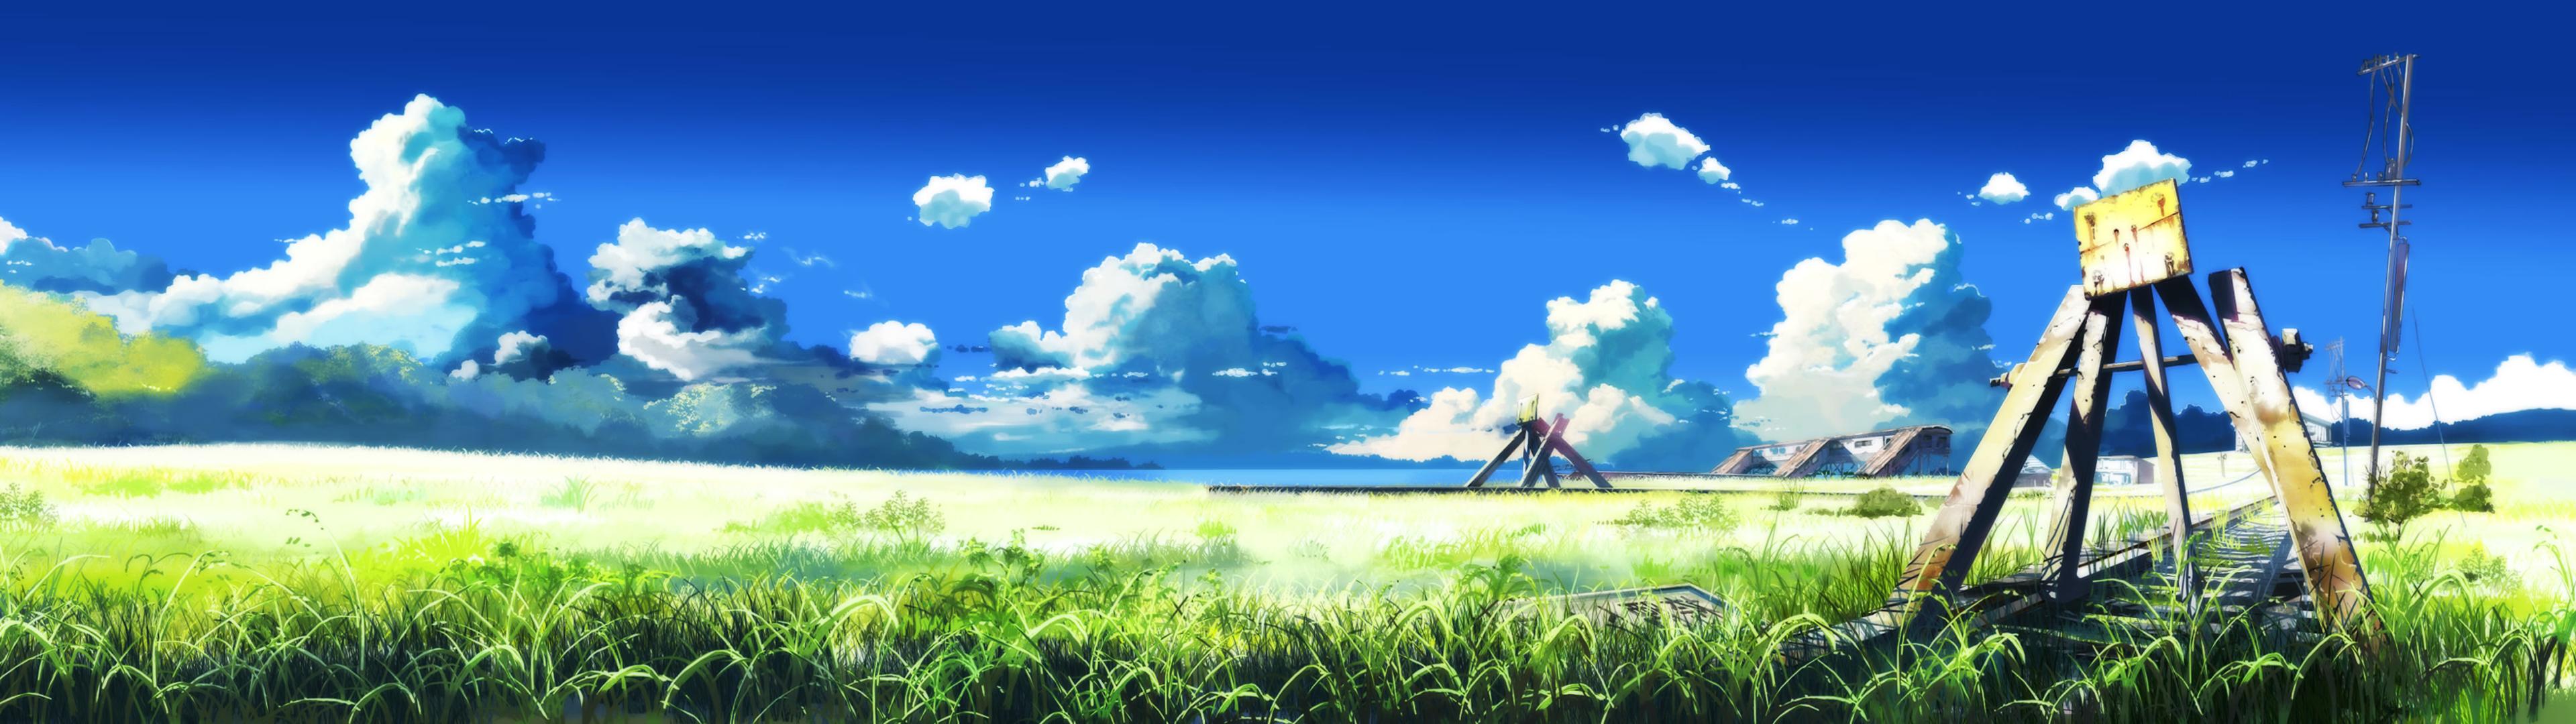 anime landscape wallpaper dual monitor